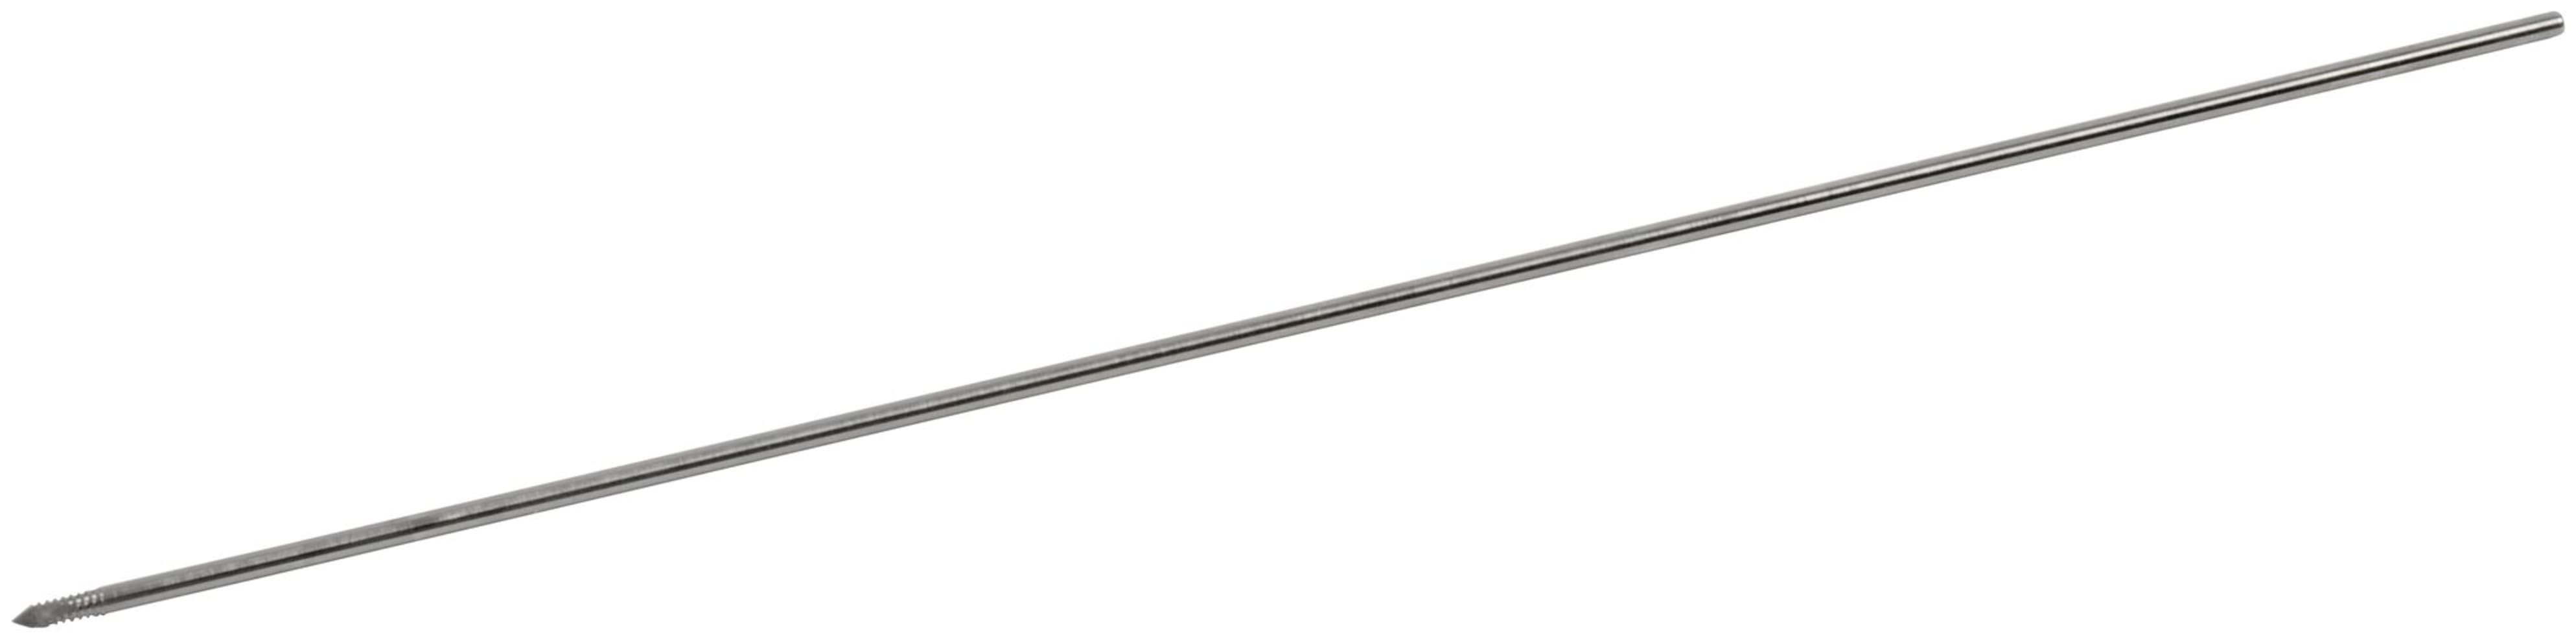 Percutaneous Pinning, Terminally Threaded Pin, 2.8 mm